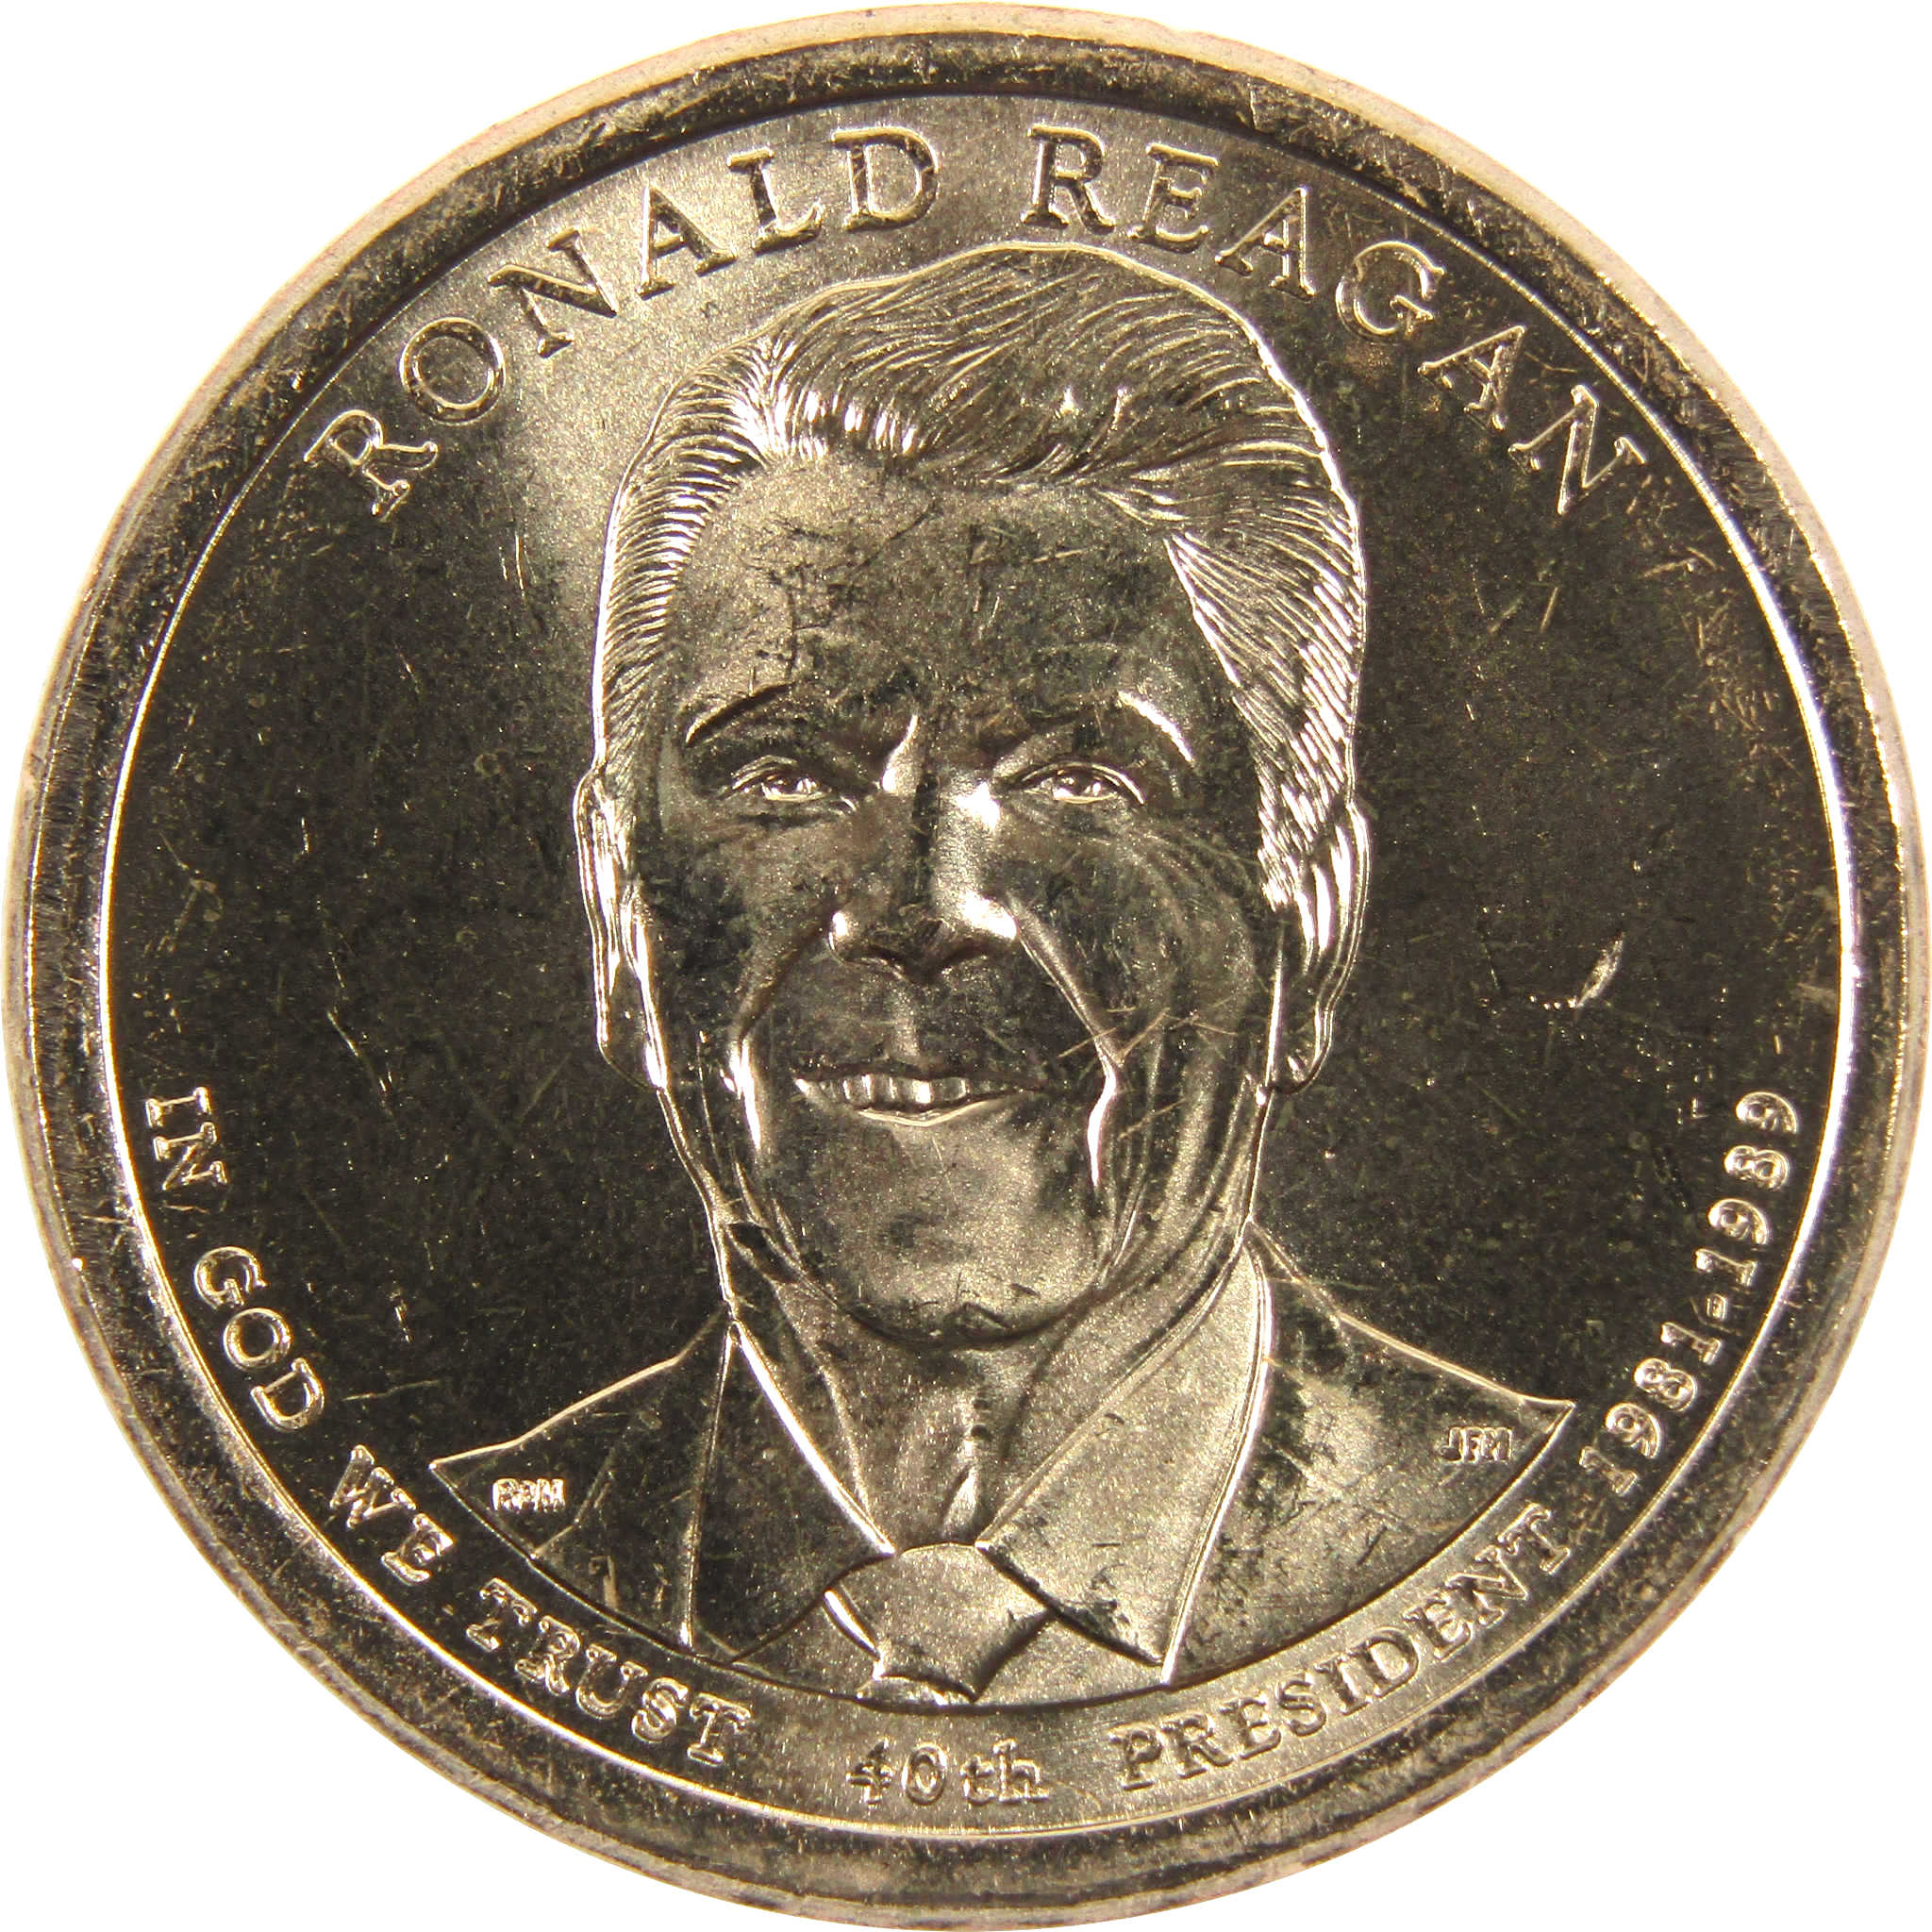 2016 P Ronald Reagan Presidential Dollar BU Uncirculated $1 Coin